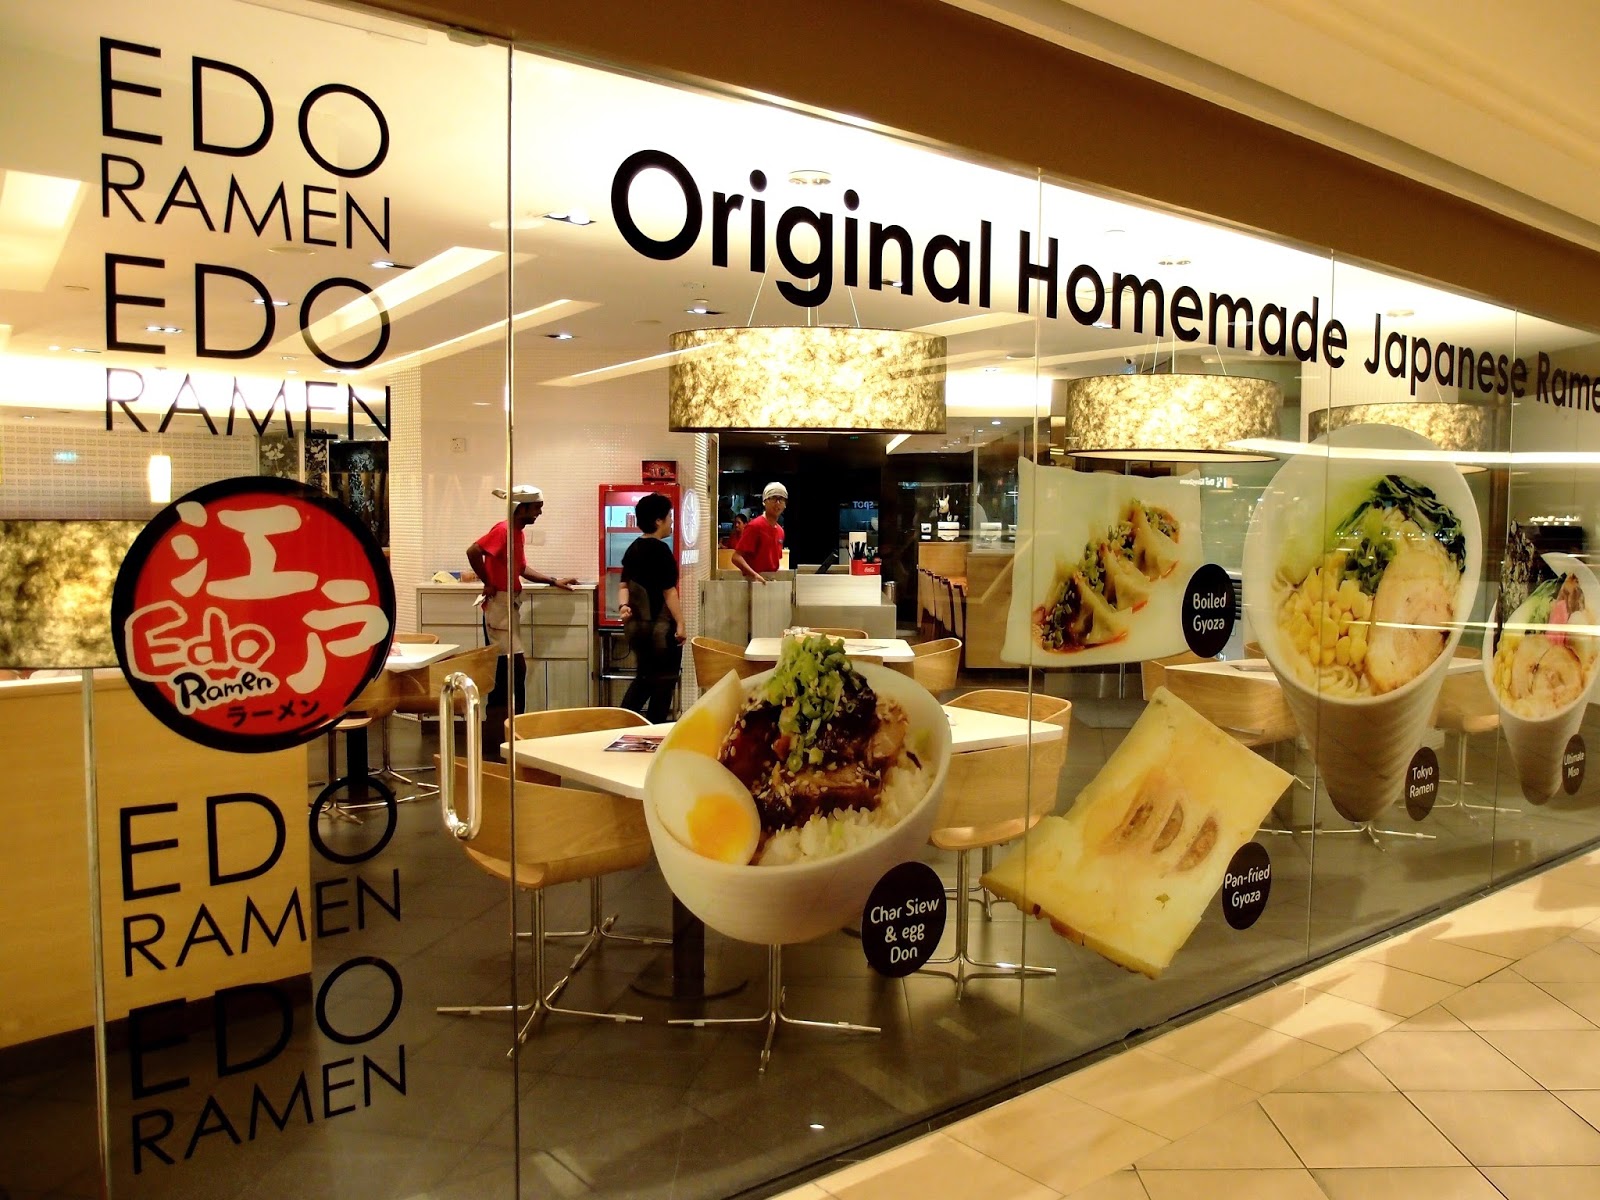 Best Restaurant To Eat - Malaysian Food Travel Blog: EDO Ramen @Mid